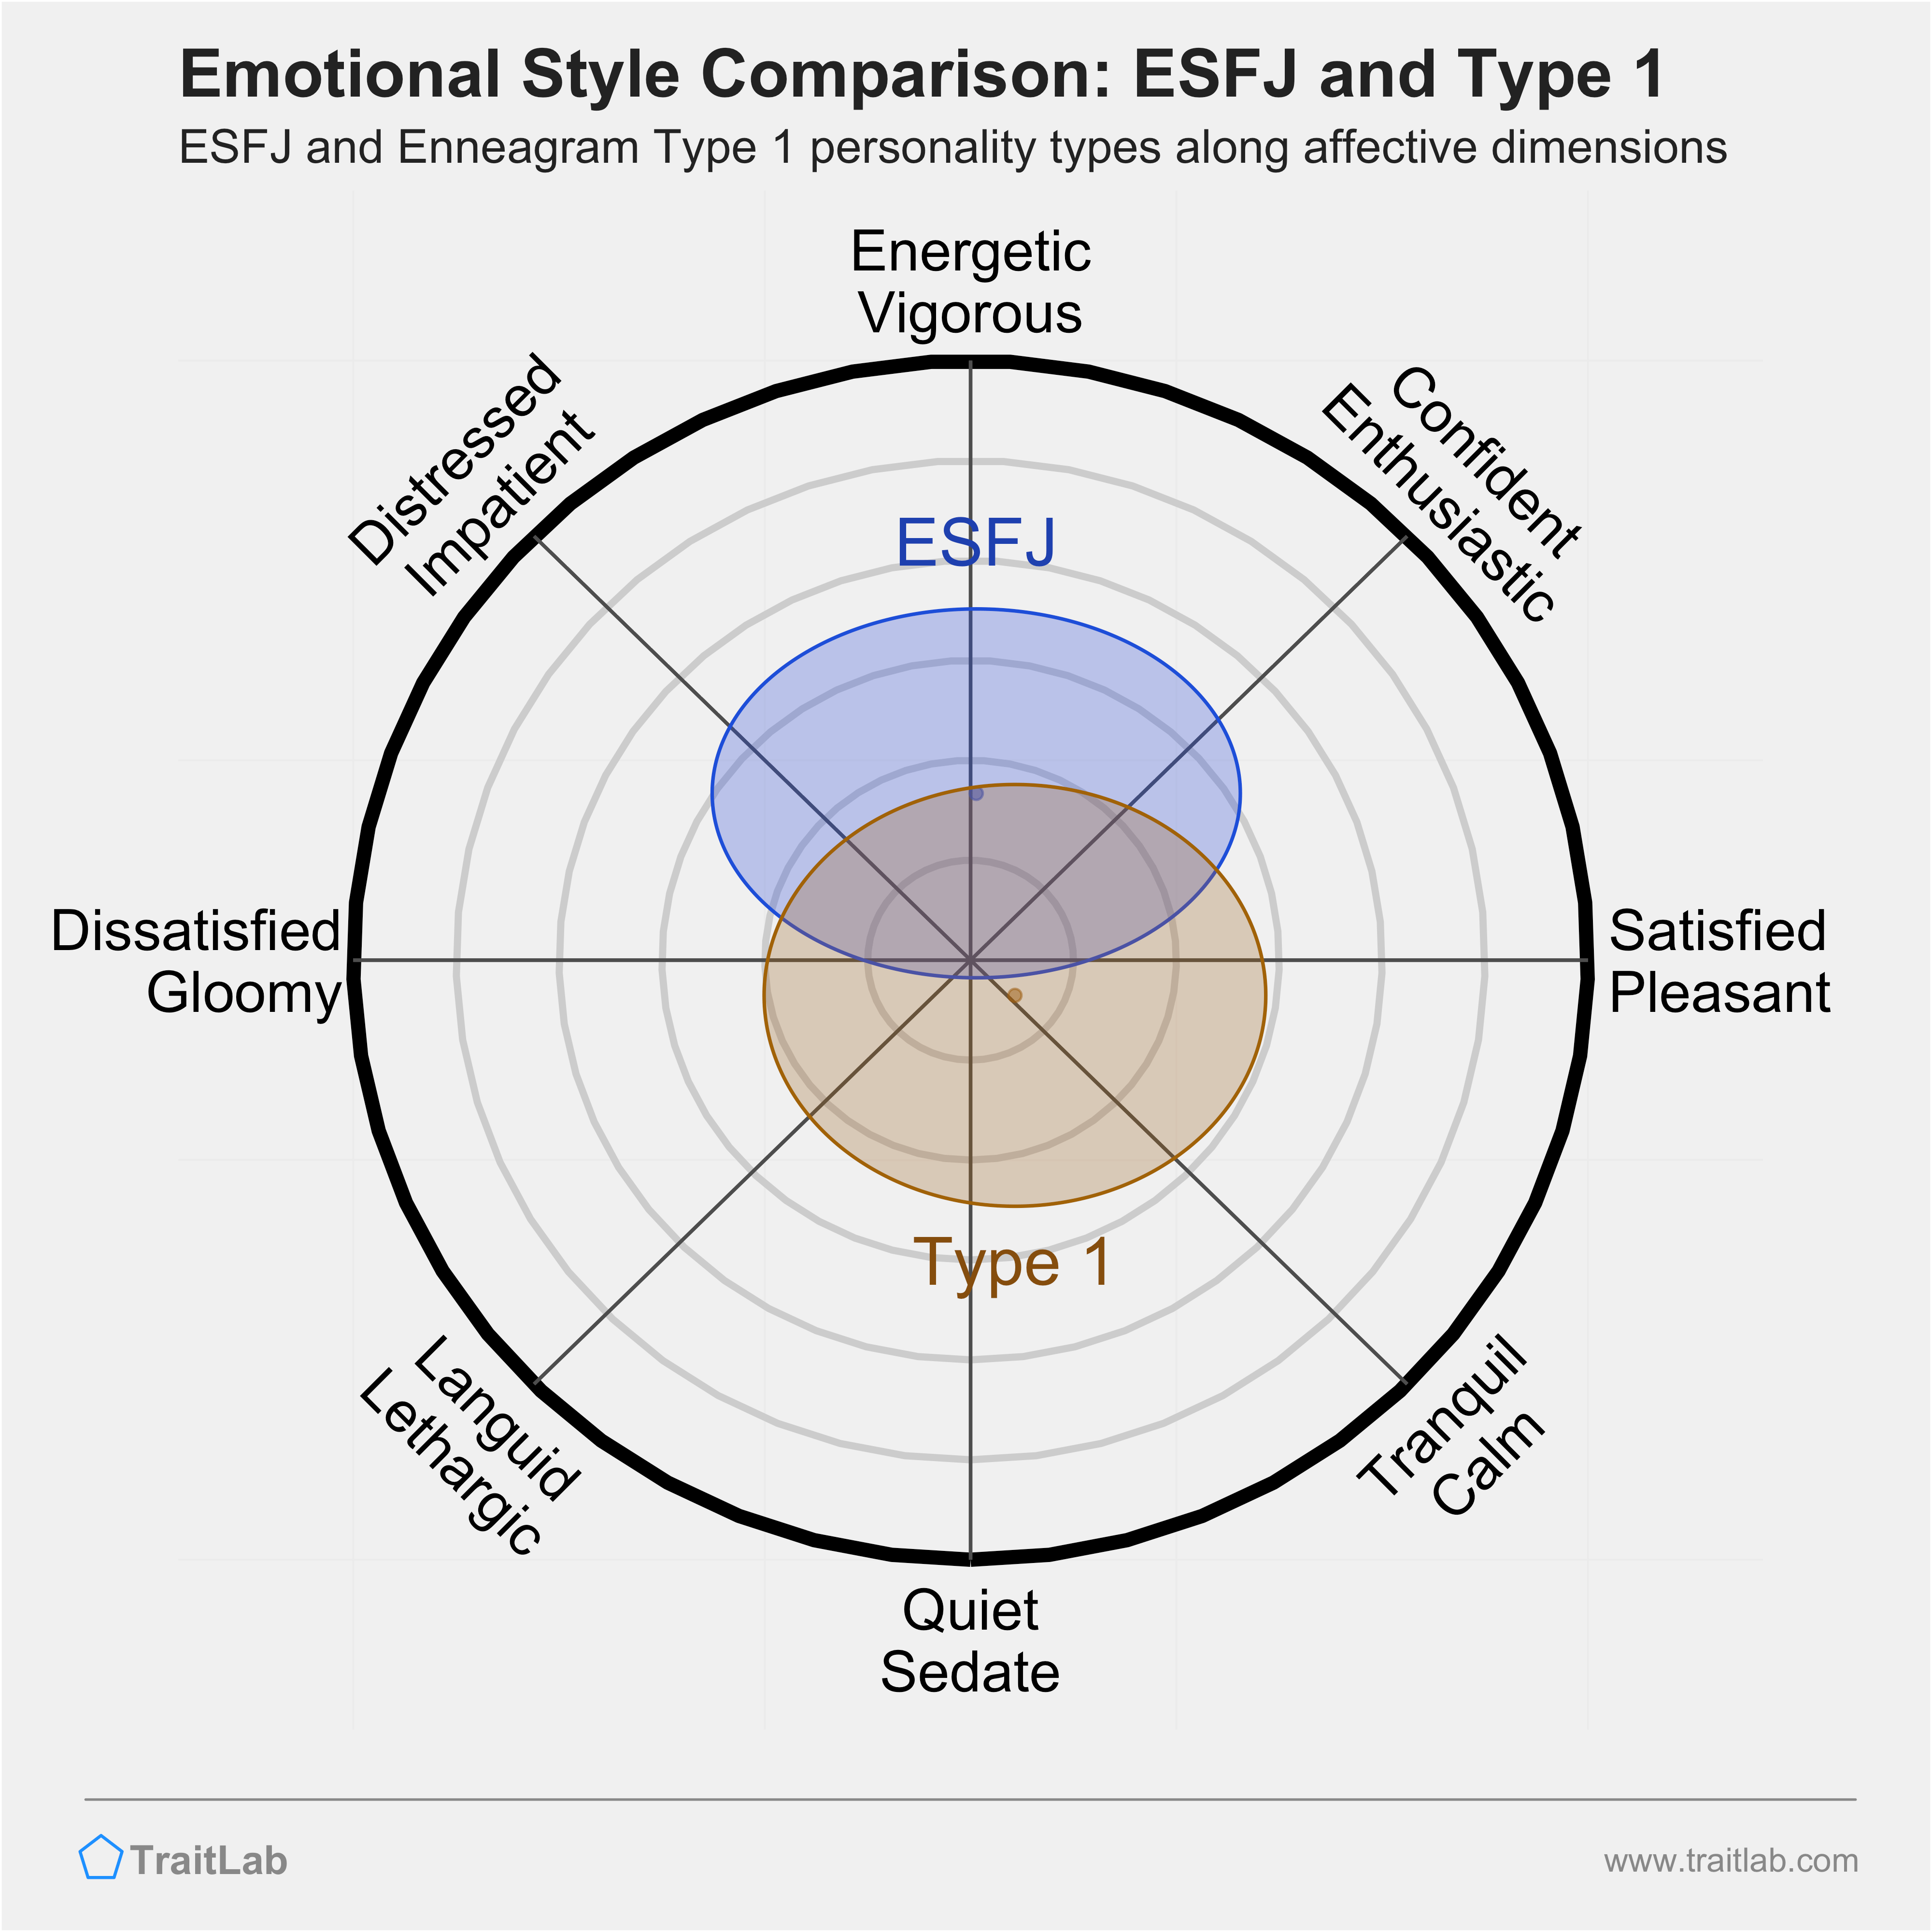 ESFJ and Type 1 comparison across emotional (affective) dimensions